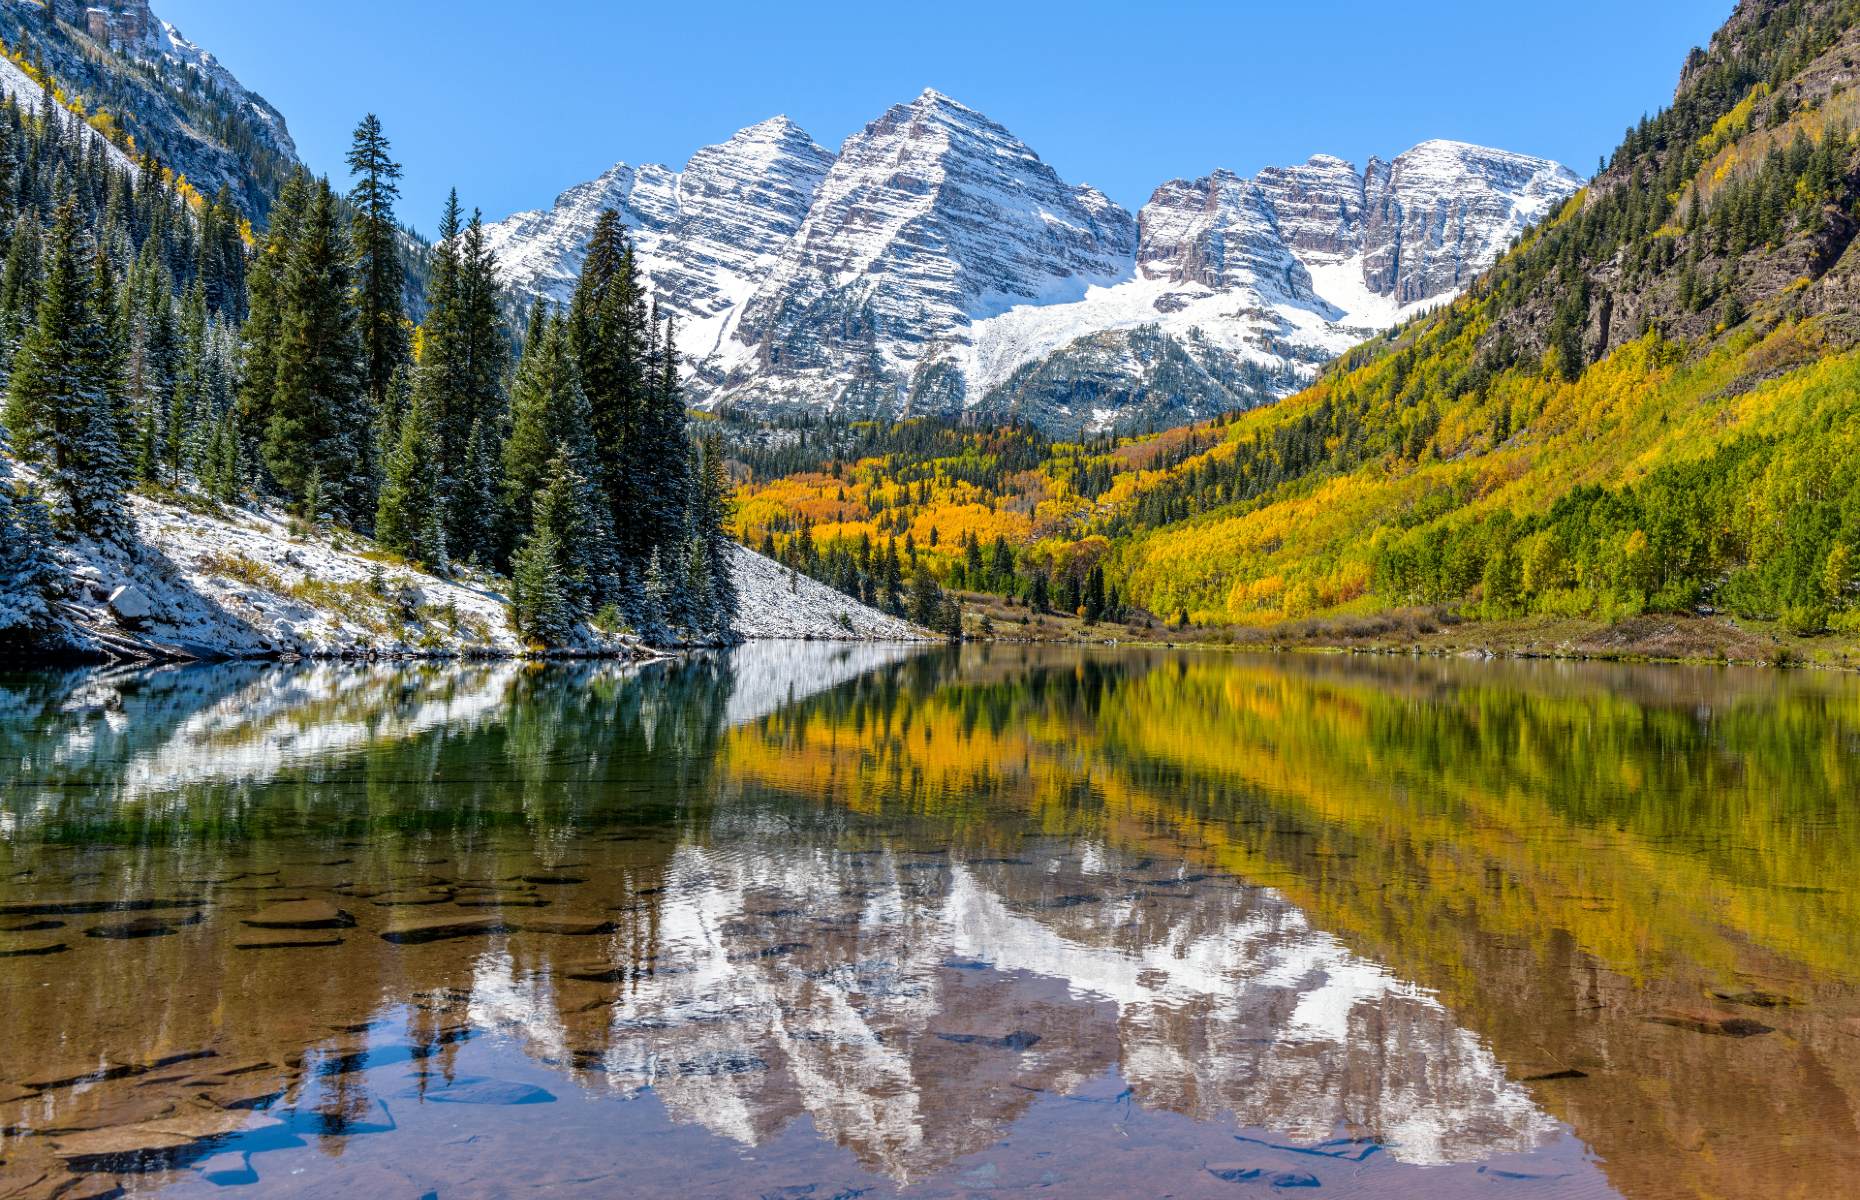 Rocky Mountains National Park (Image: Sean Xu/Shutterstock)